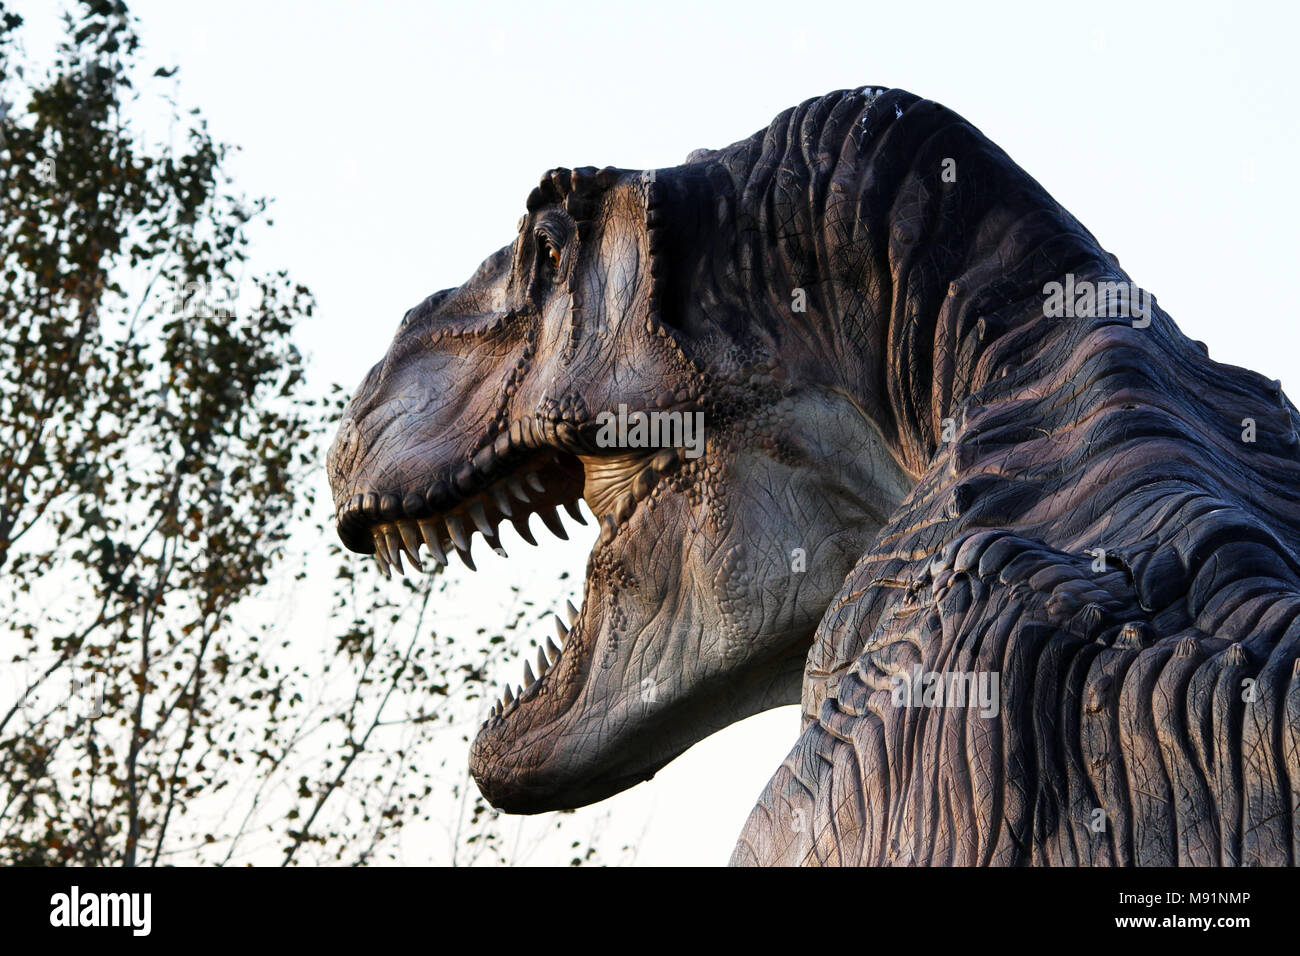 Suggestive Rekonstruktion von Predator dinosaurus - Ostellato, Ferrara, Italien Stockfoto